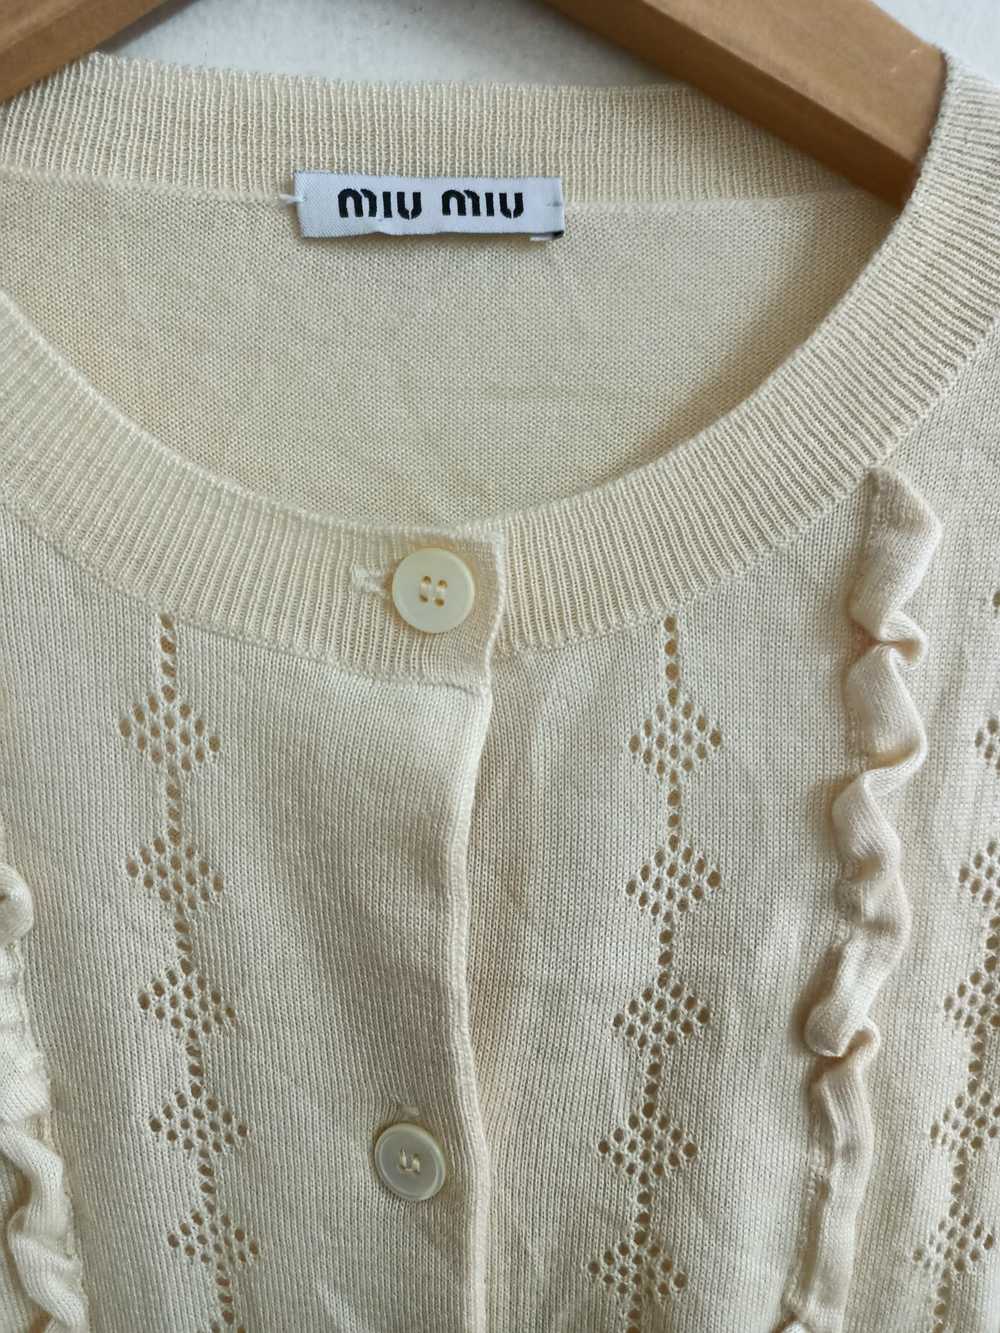 Italian Designers × Miu Miu Miu Miu Made in Italy - image 3